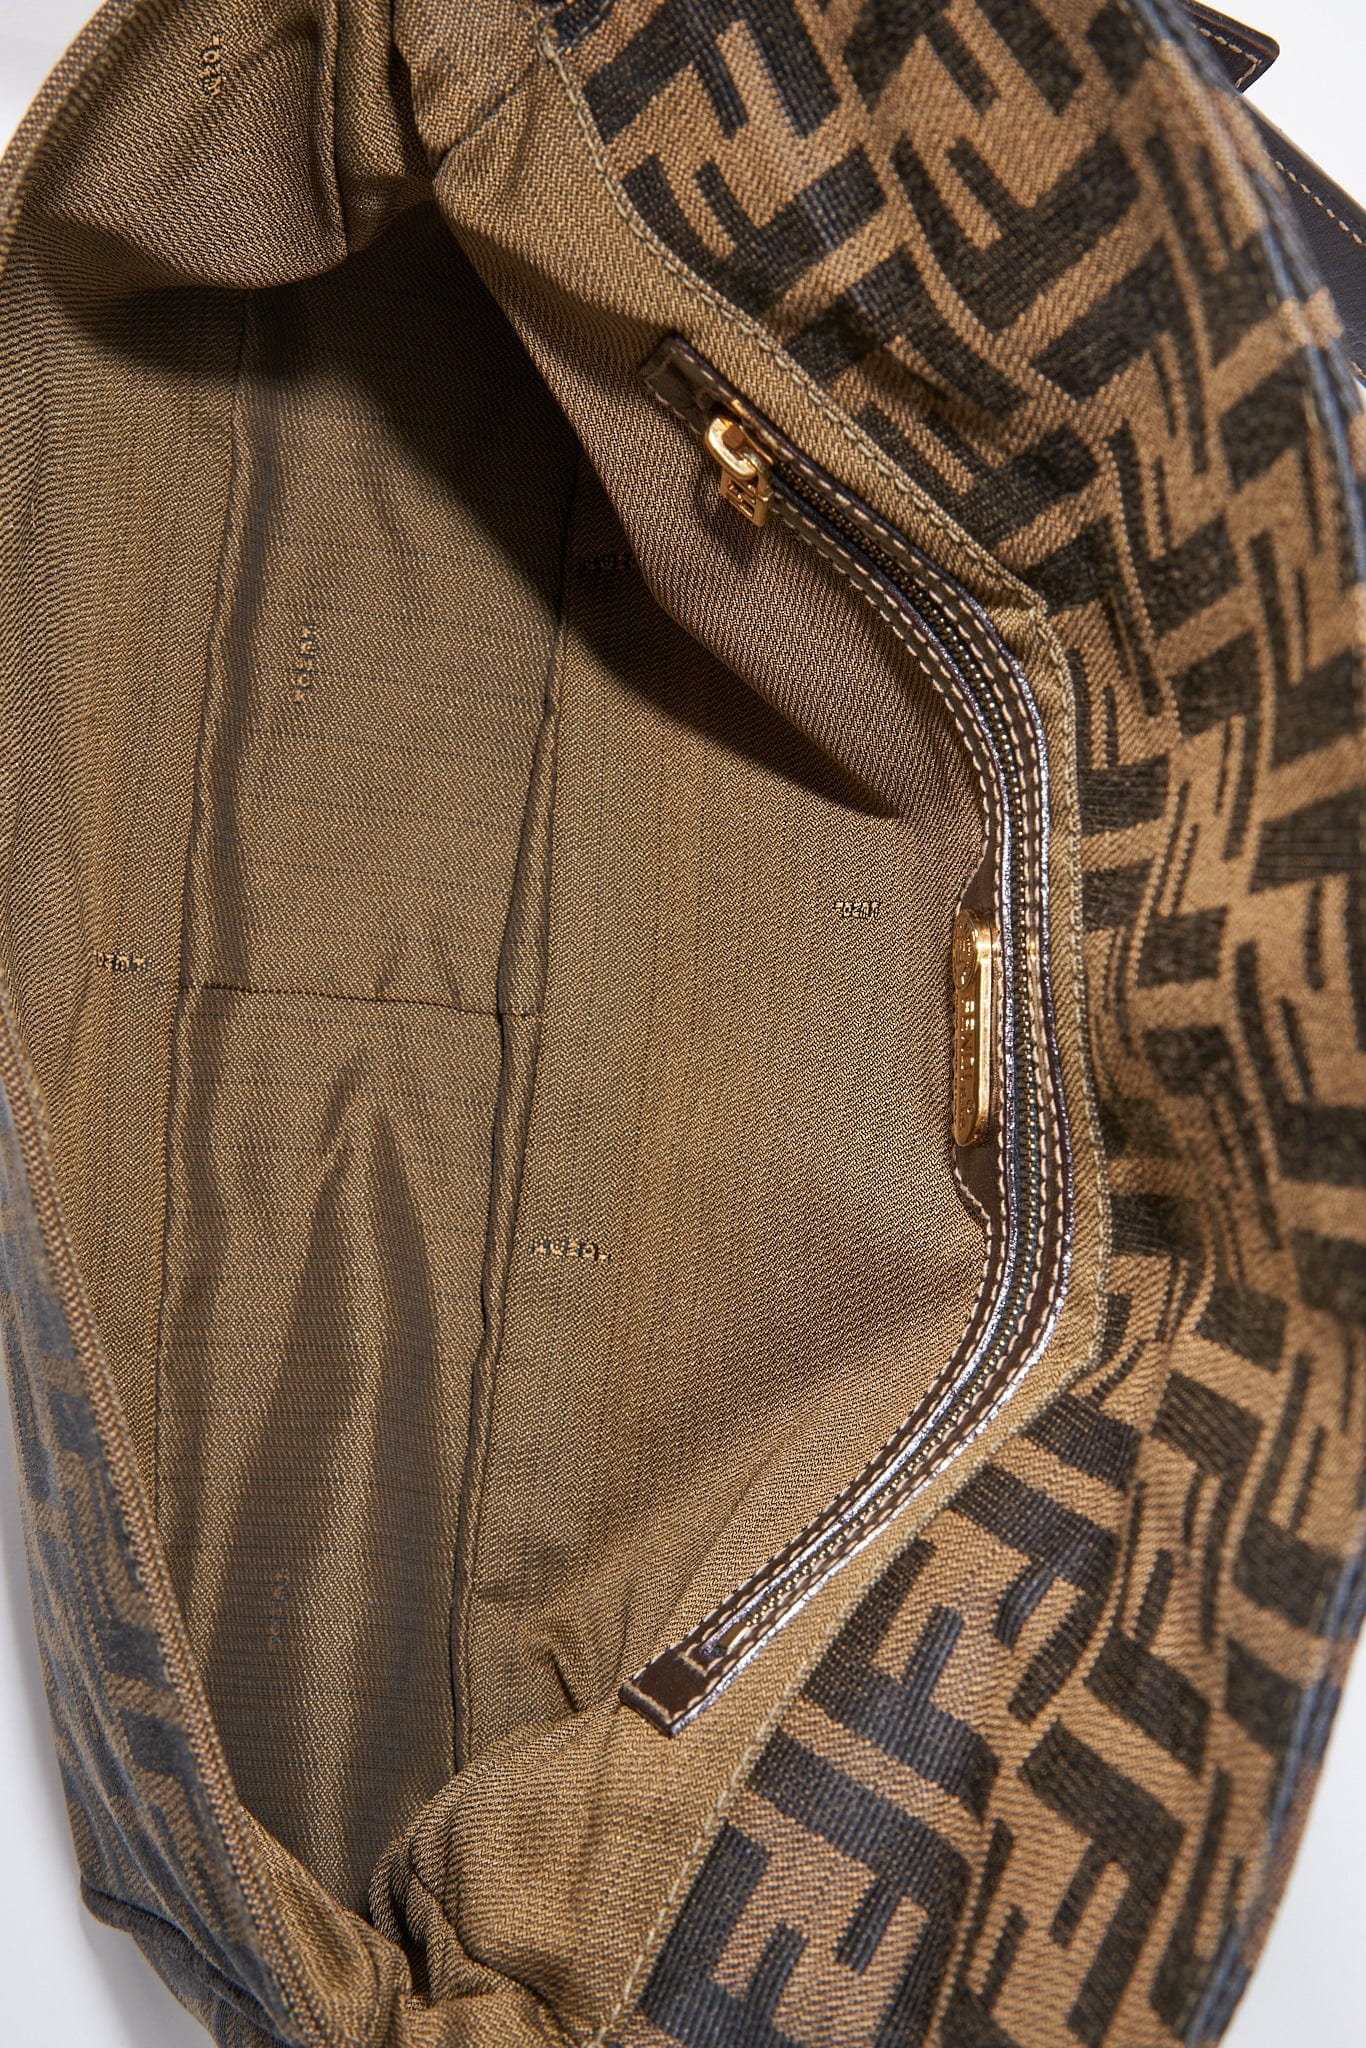 Fendi Zucca Pattern Print Shoulder Bag